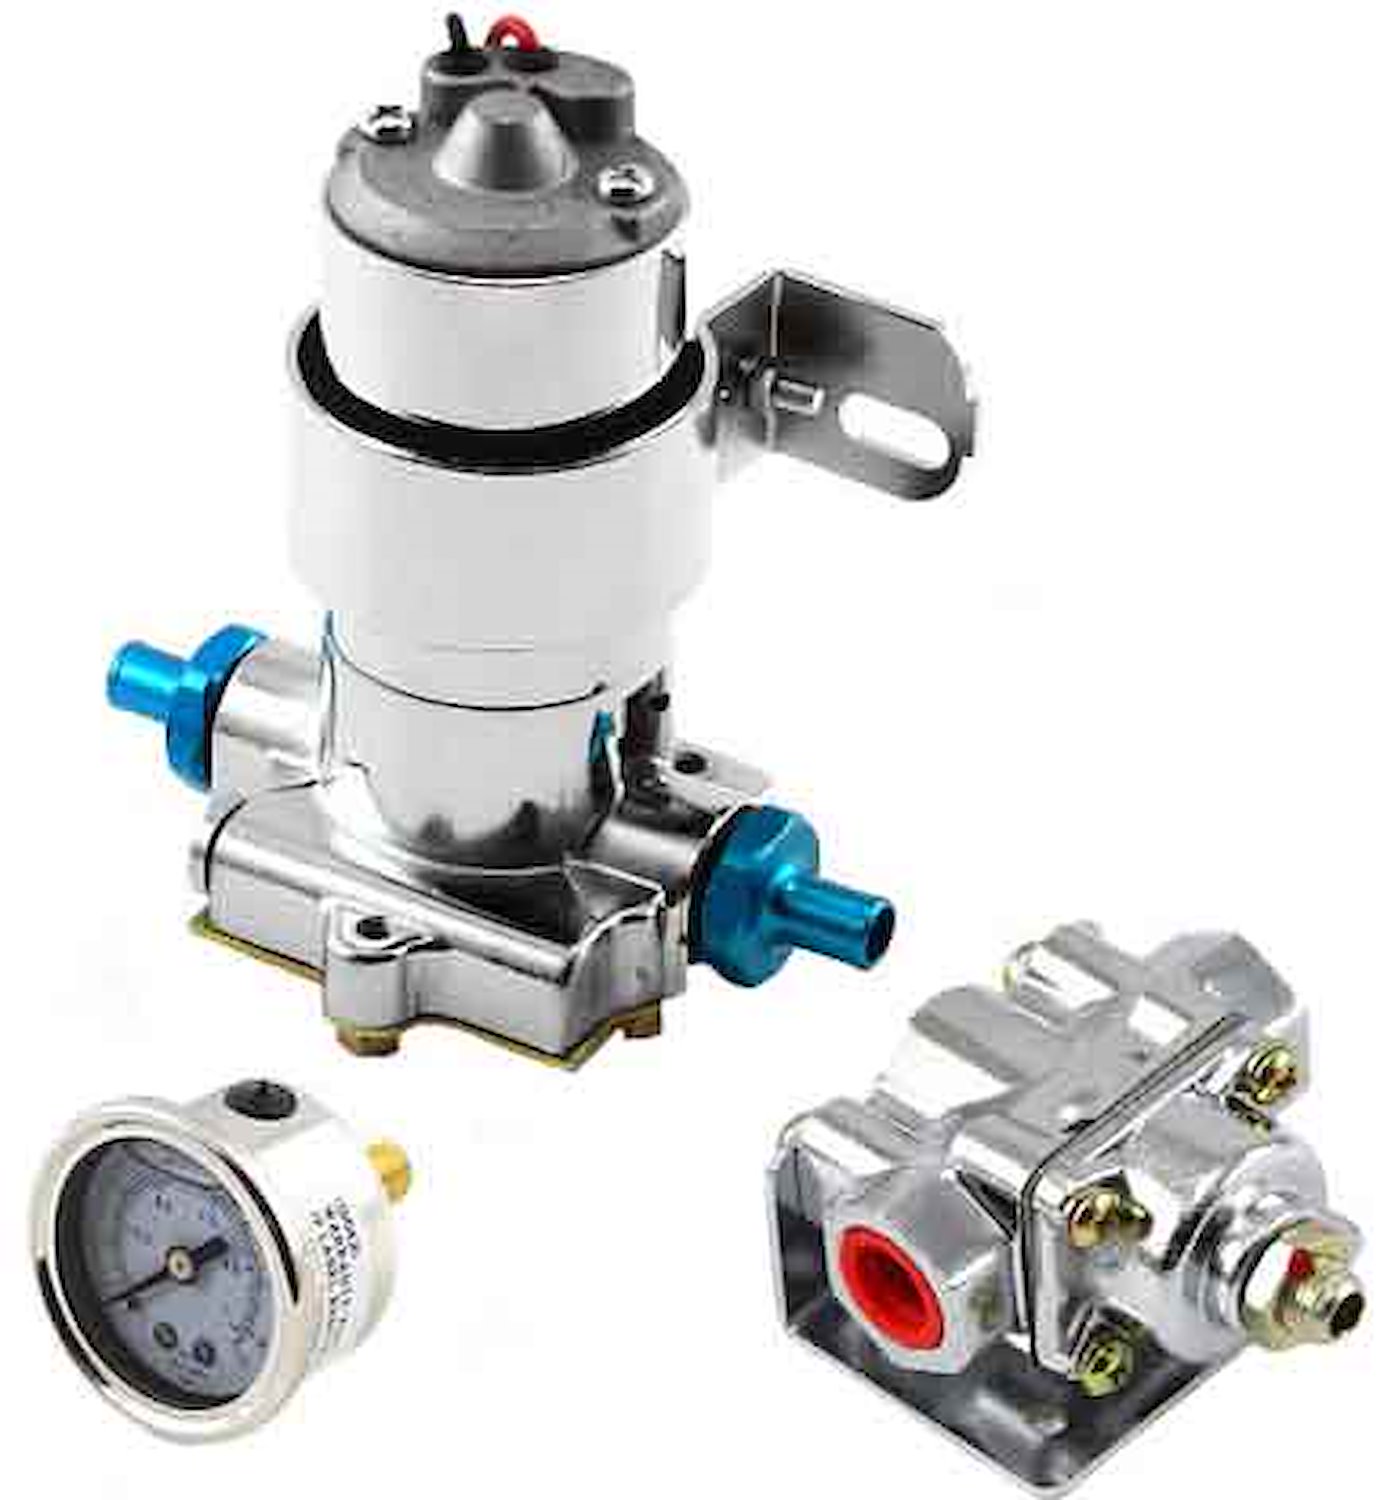 140 Ghp Universal Electric Fuel Pump Kit w/ Liquid-Filled Gauge and Chrome Regulator